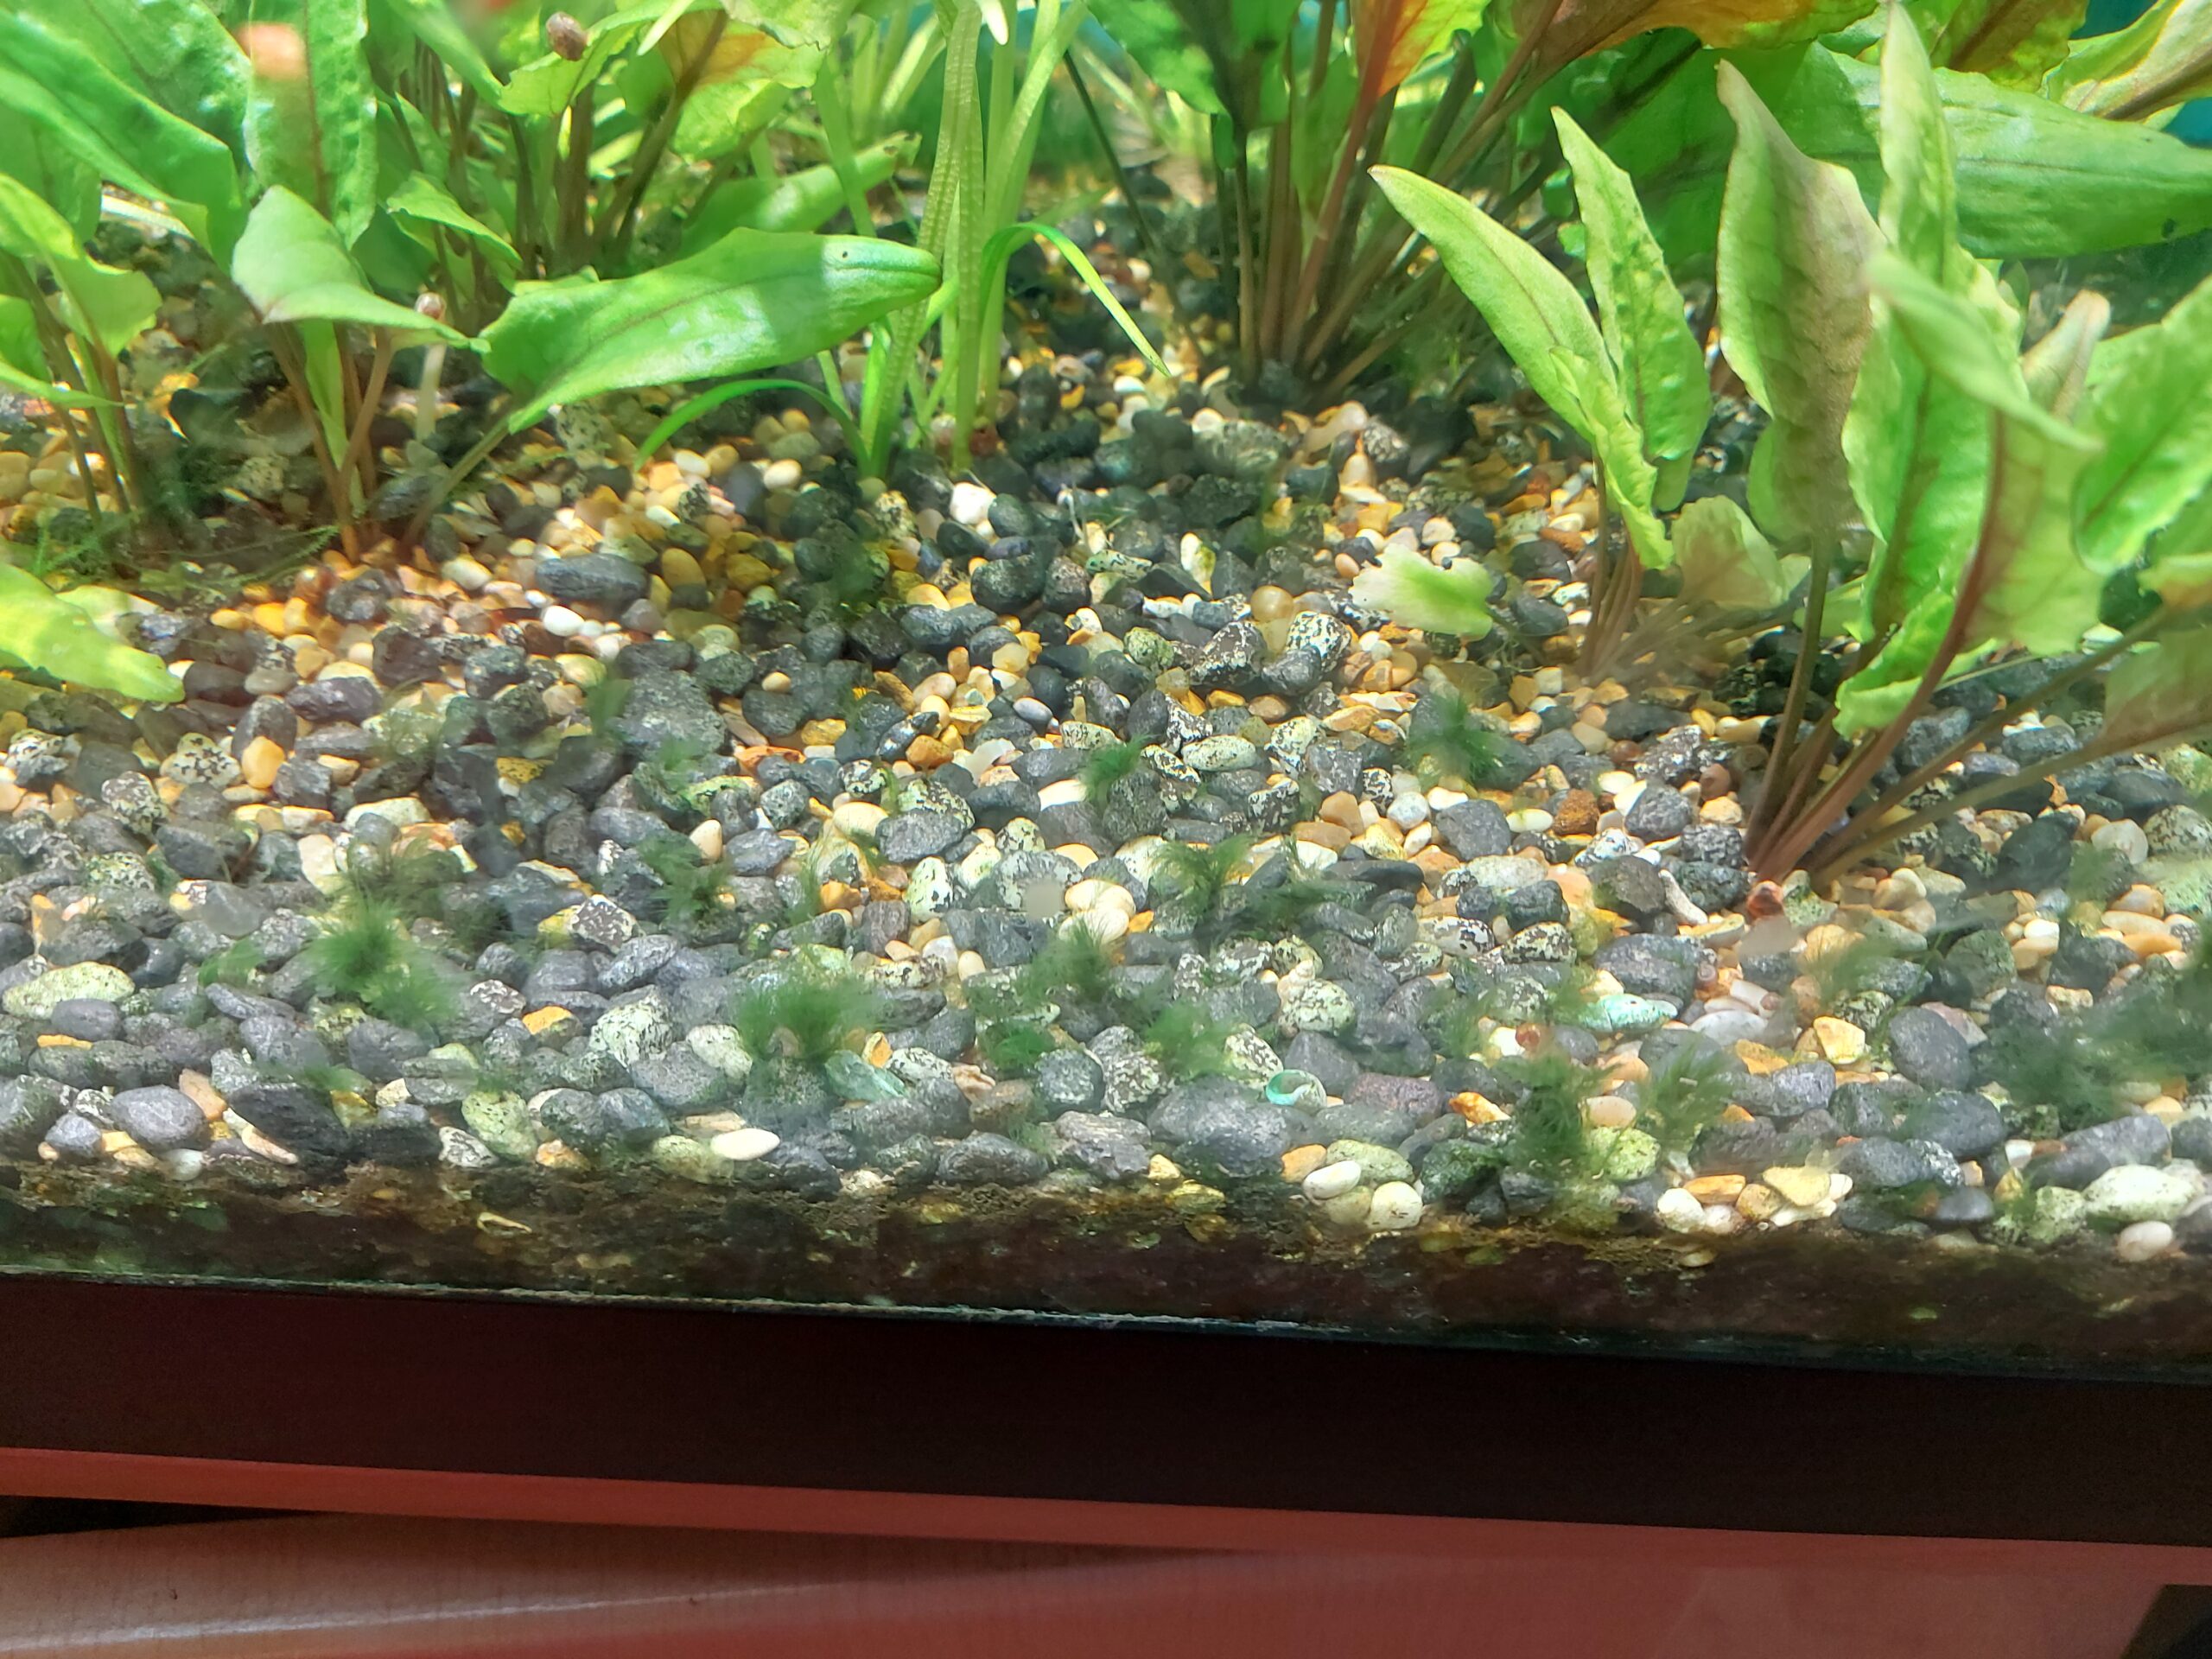 Does Fish Poop in an Aquarium Cause Algae Growth?